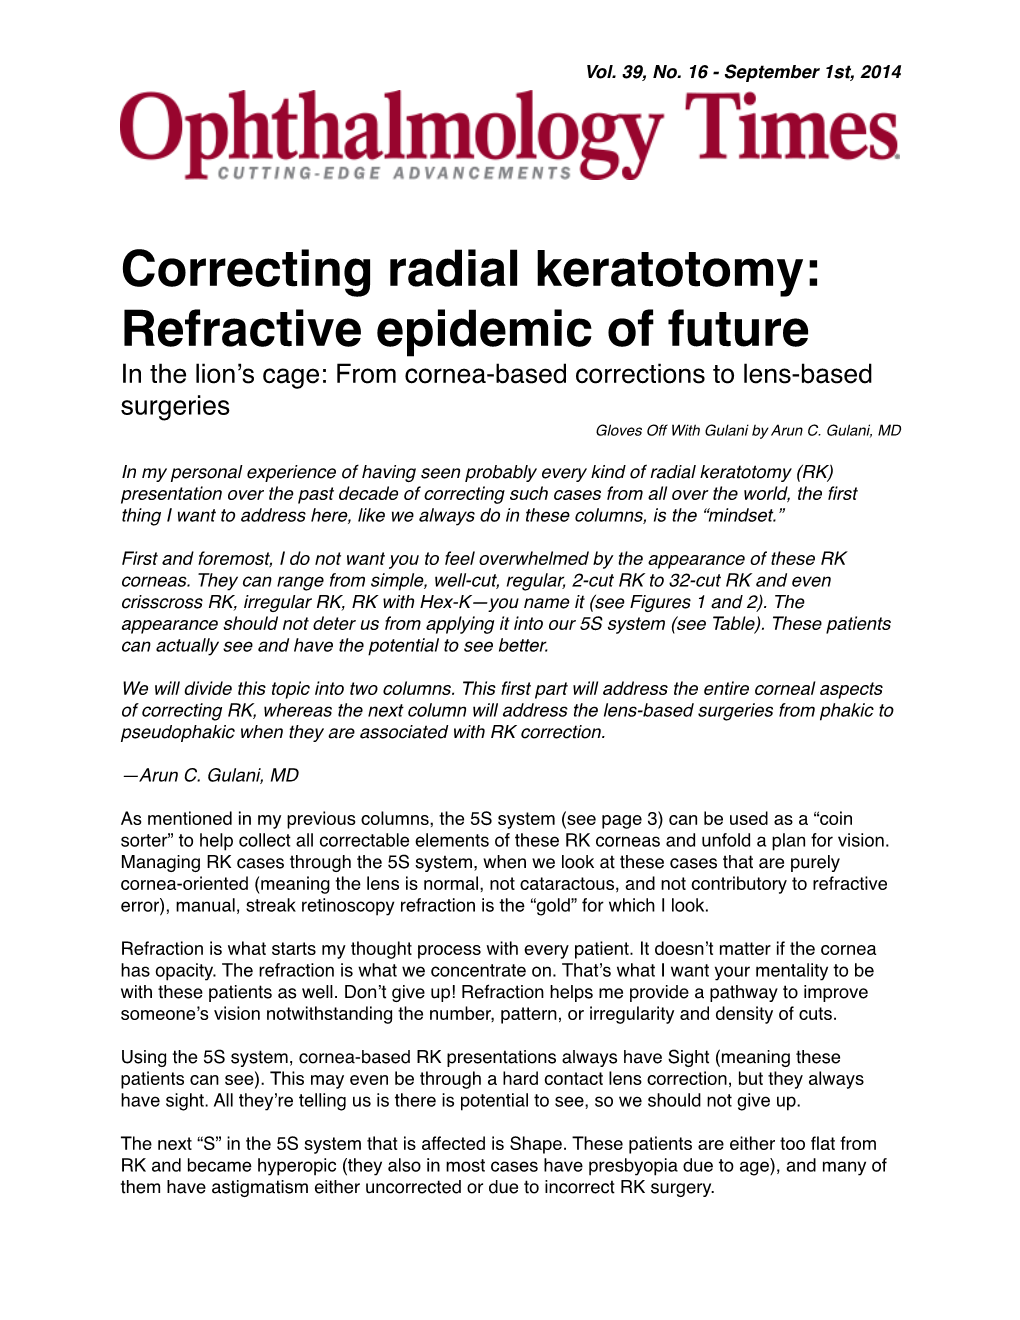 Correcting Radial Keratotomy- Refractive Epidemic of Future